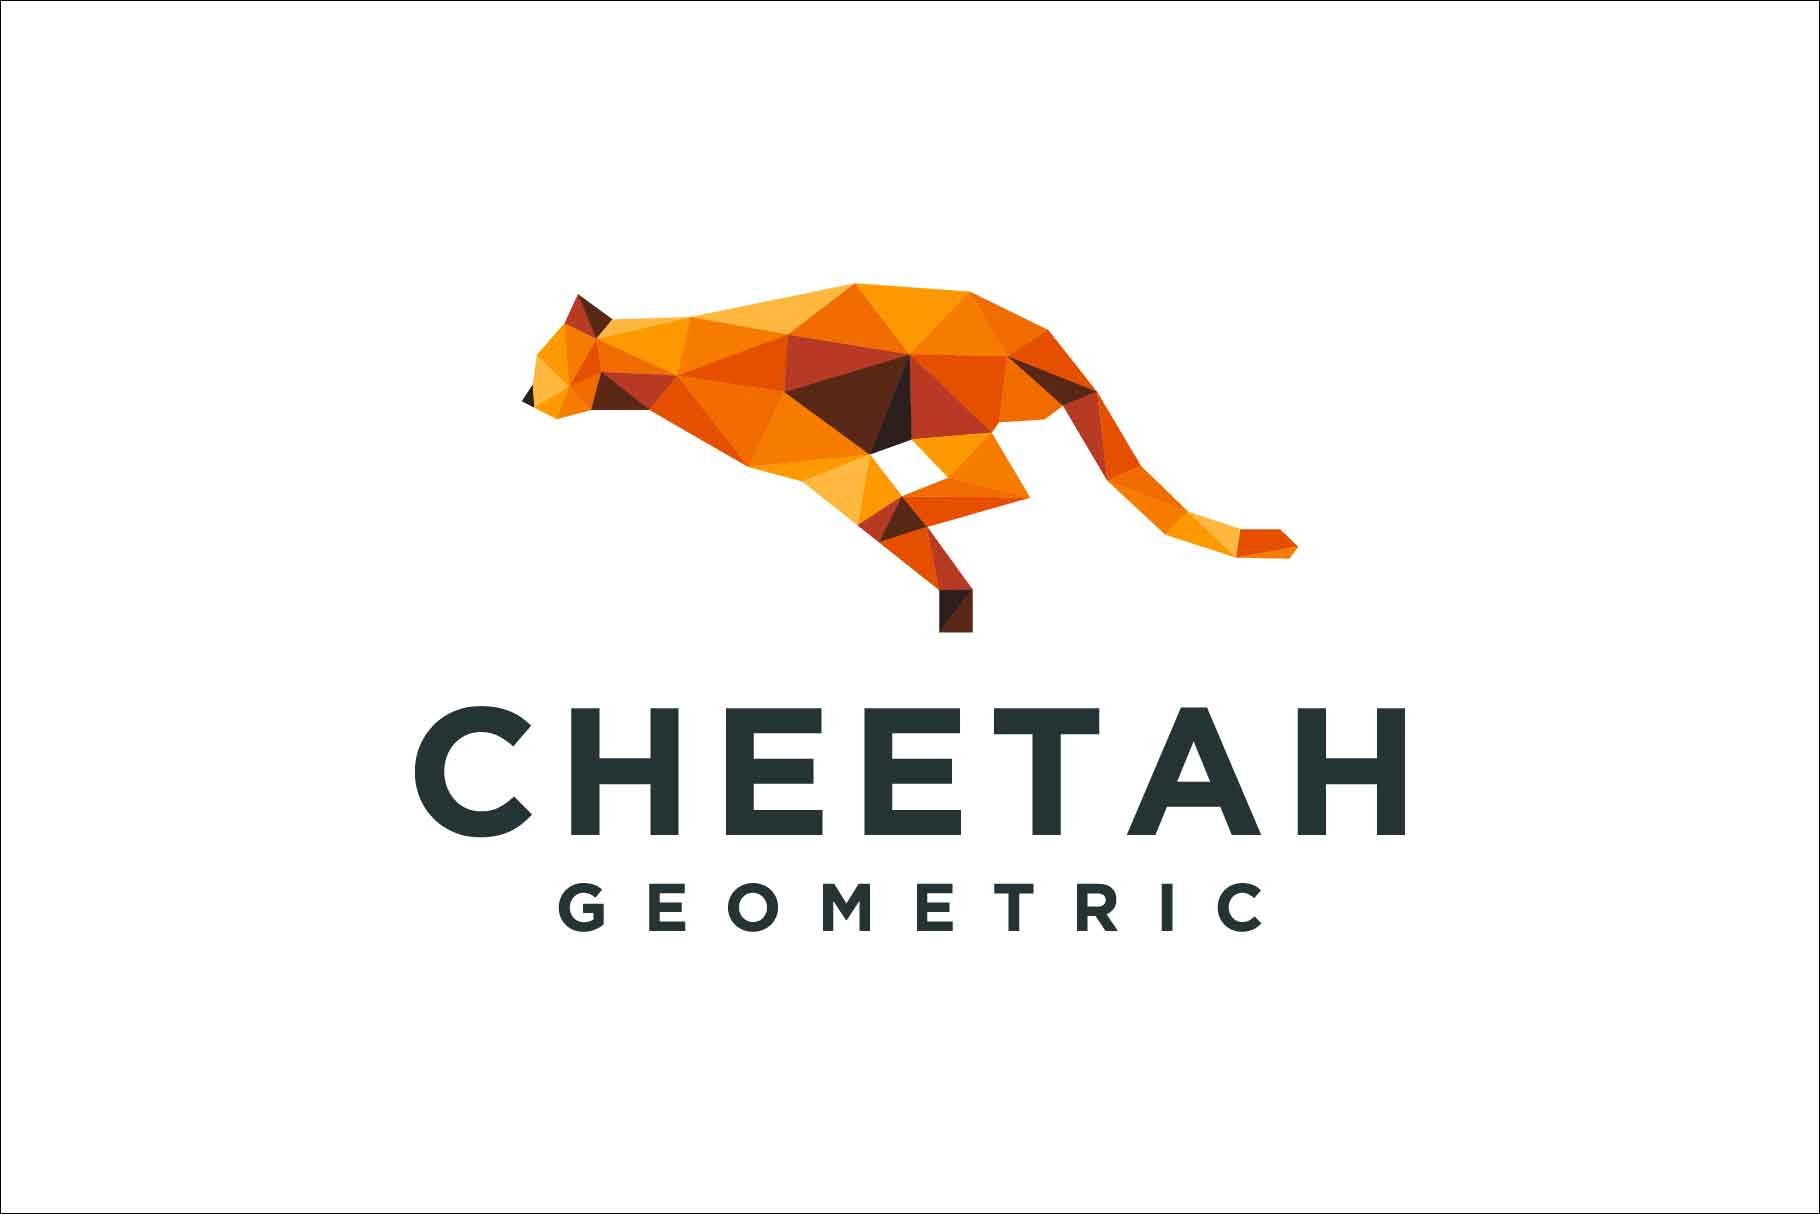 cheetah geometric colorful logo cover image.